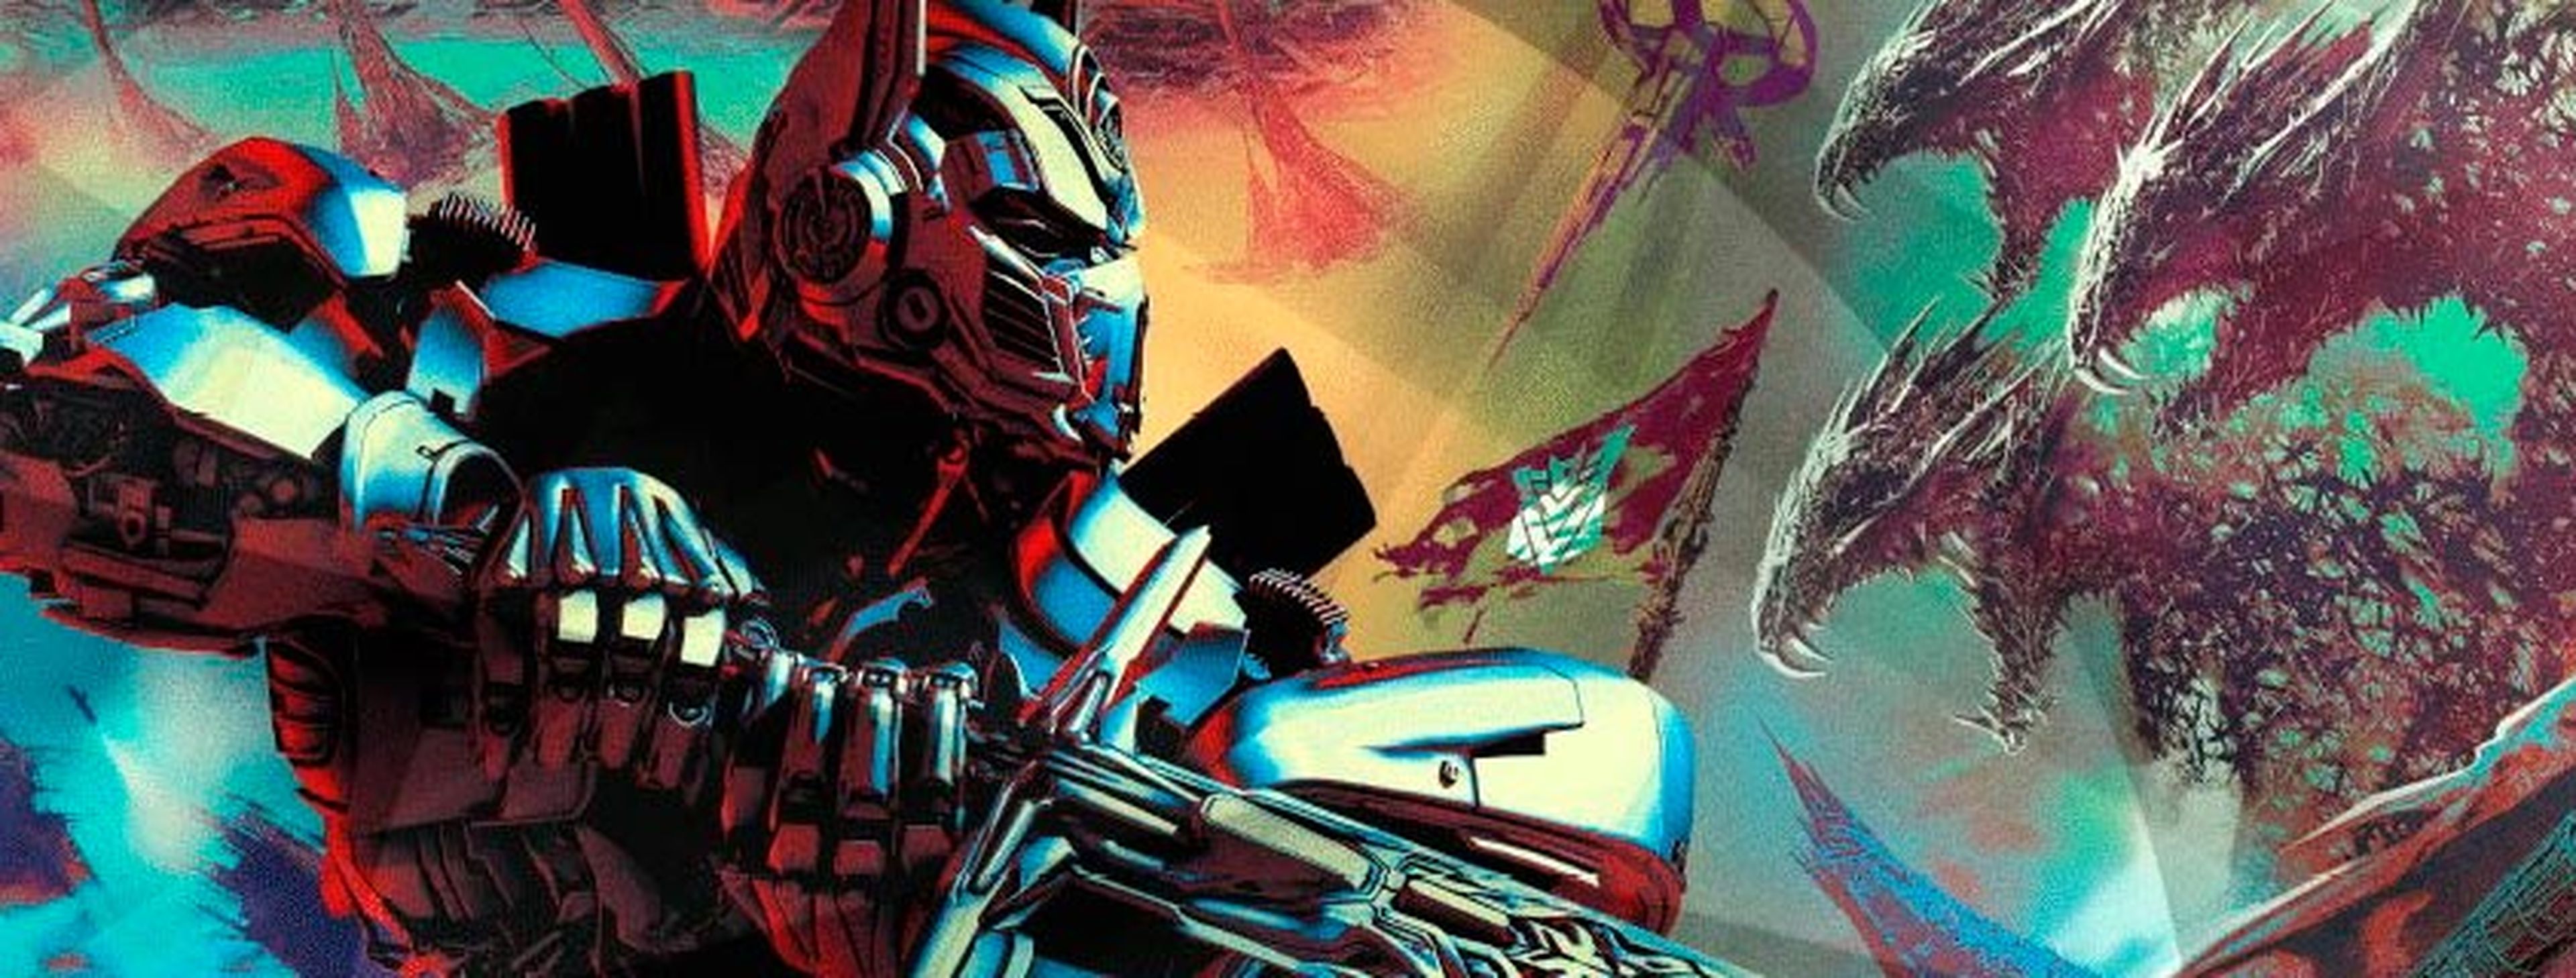 Transformers: The last knight